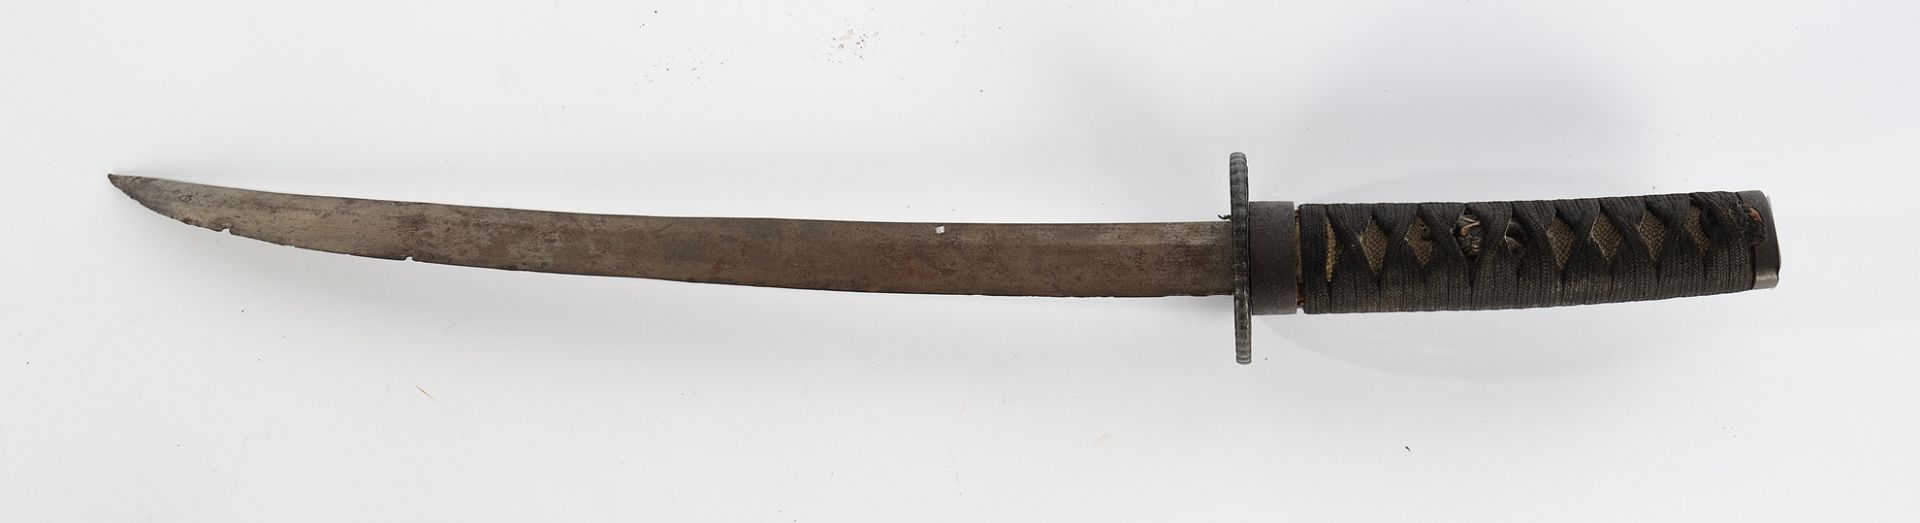 Tanto, Japan, 19th century, iron blade, handle with ray skin and pair of menuki, tsuba, 55 cm high,